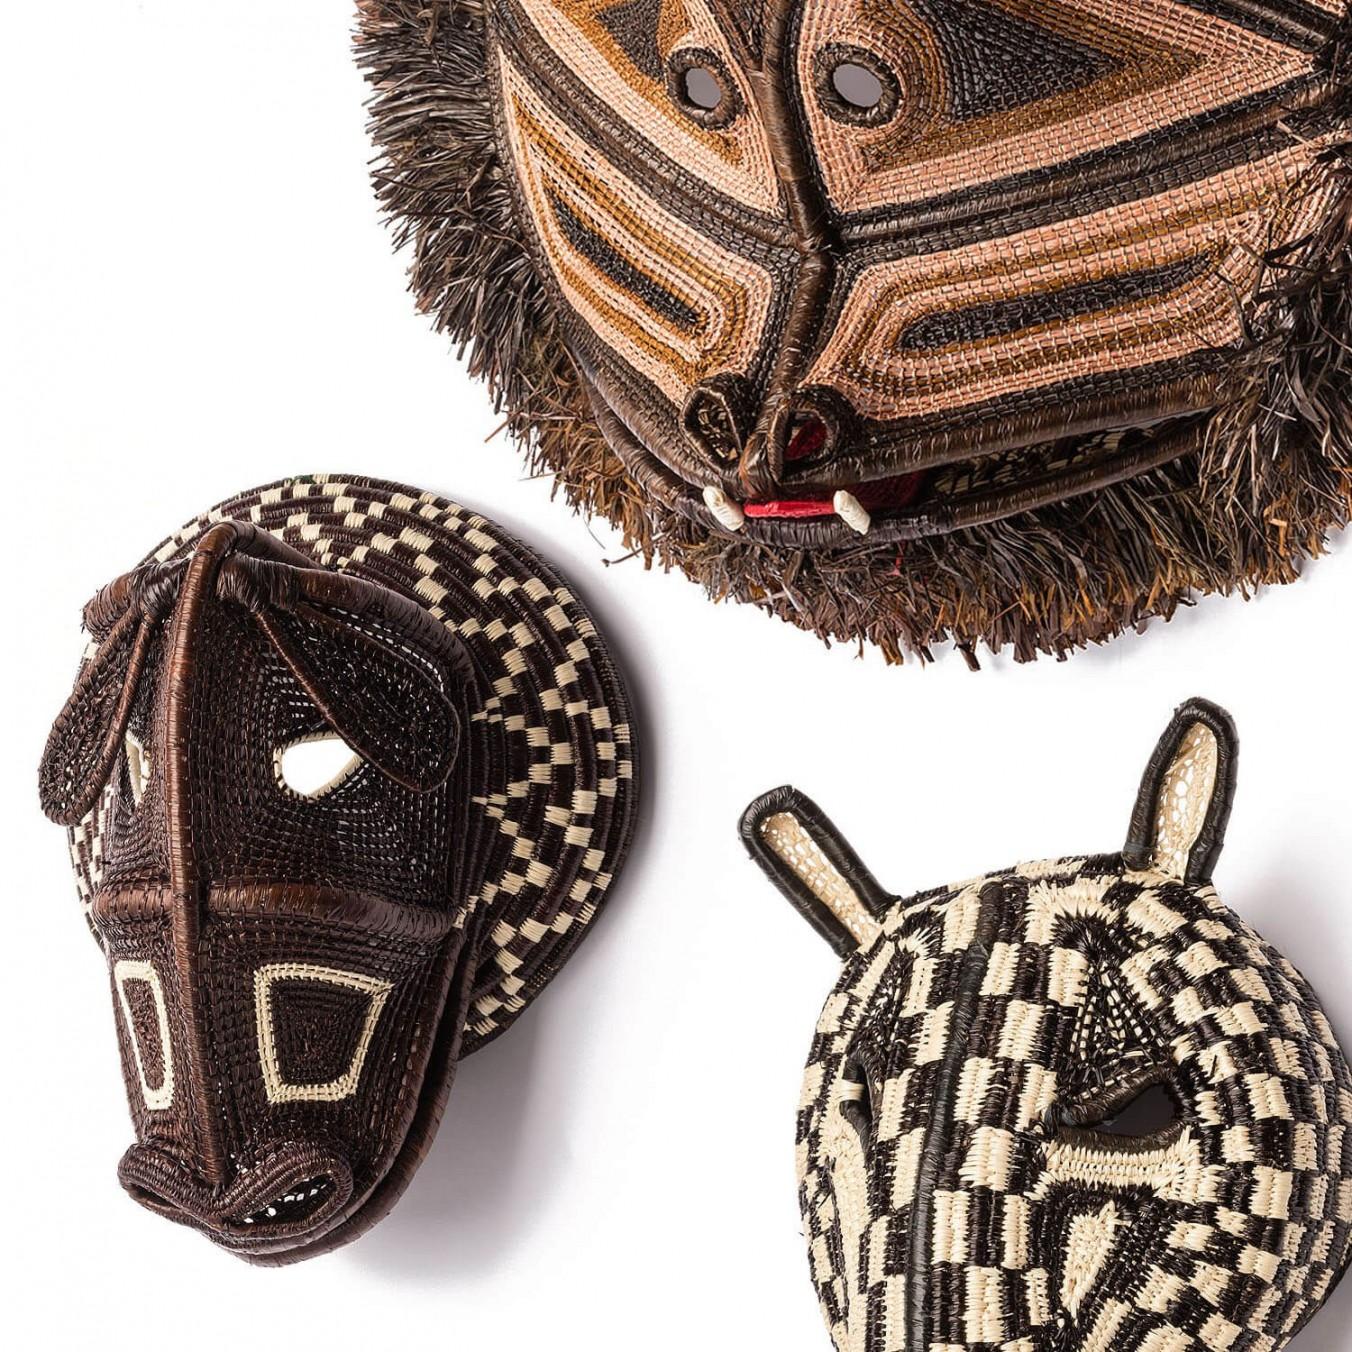 Contemporary Decorative hand-woven mask from Panama, Nemboro Mono by Ethic&Tropic For Sale